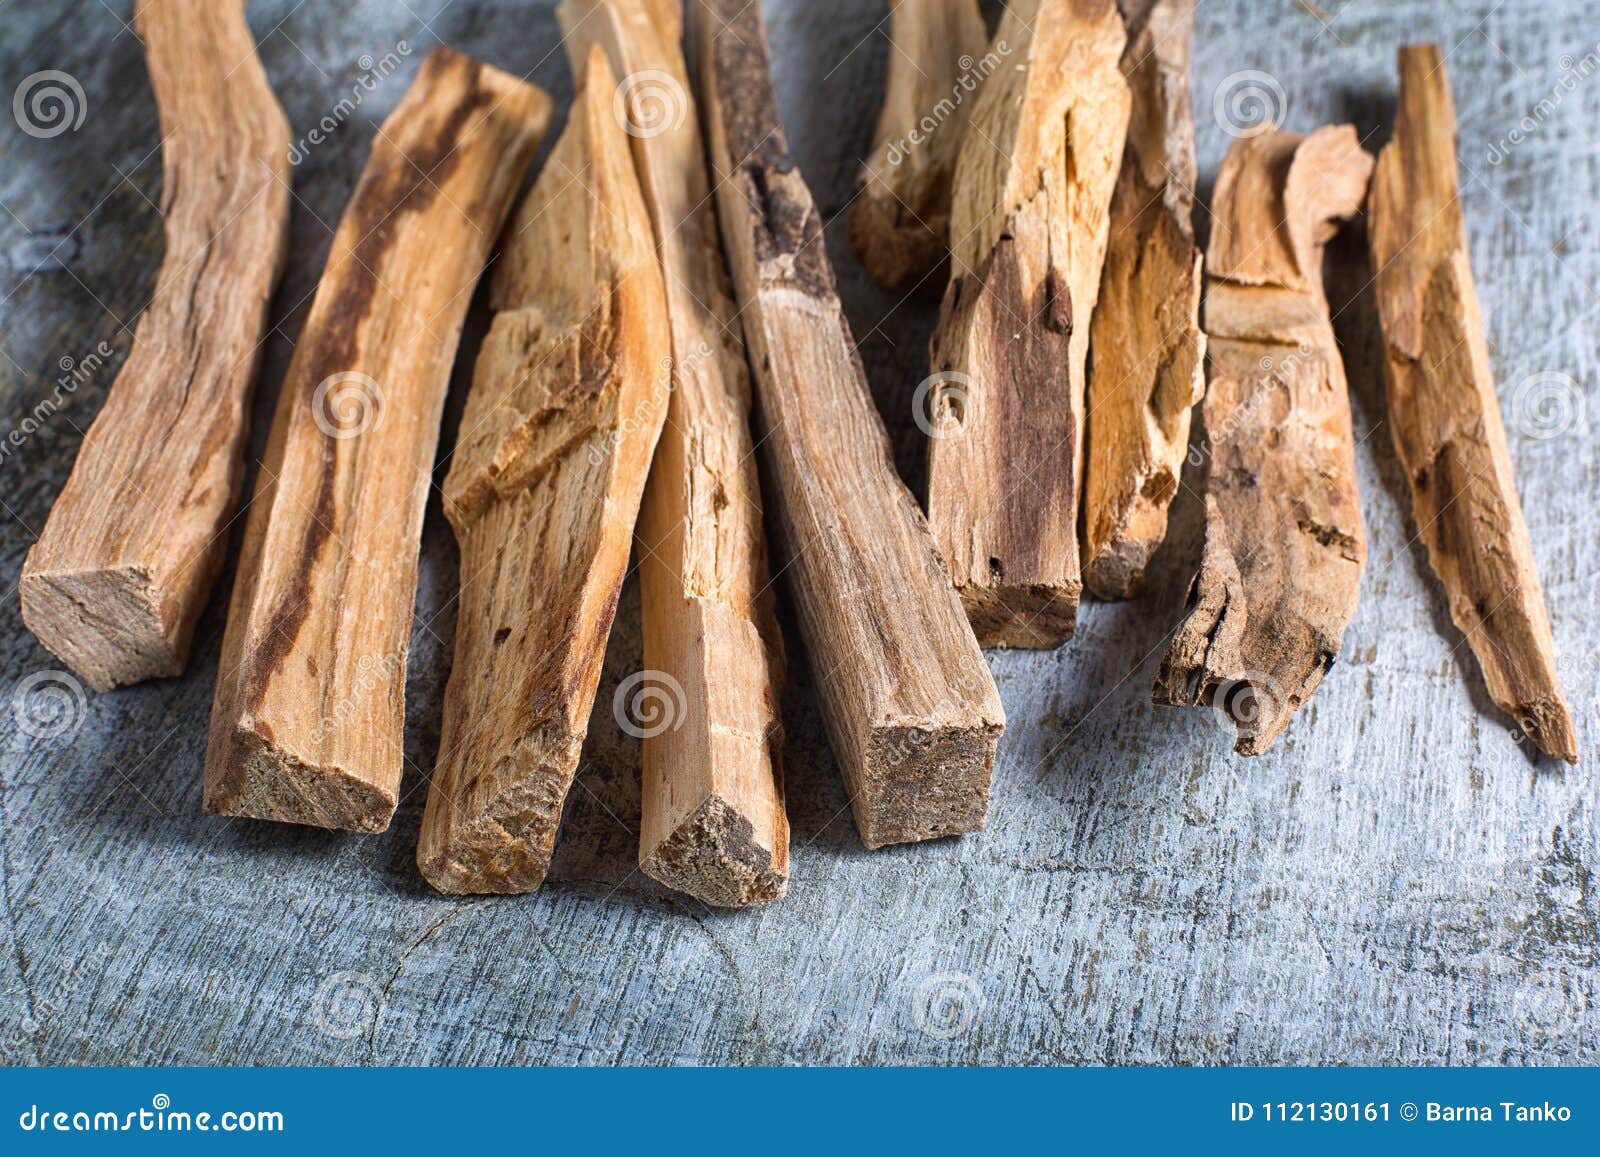 palo santo wood chips